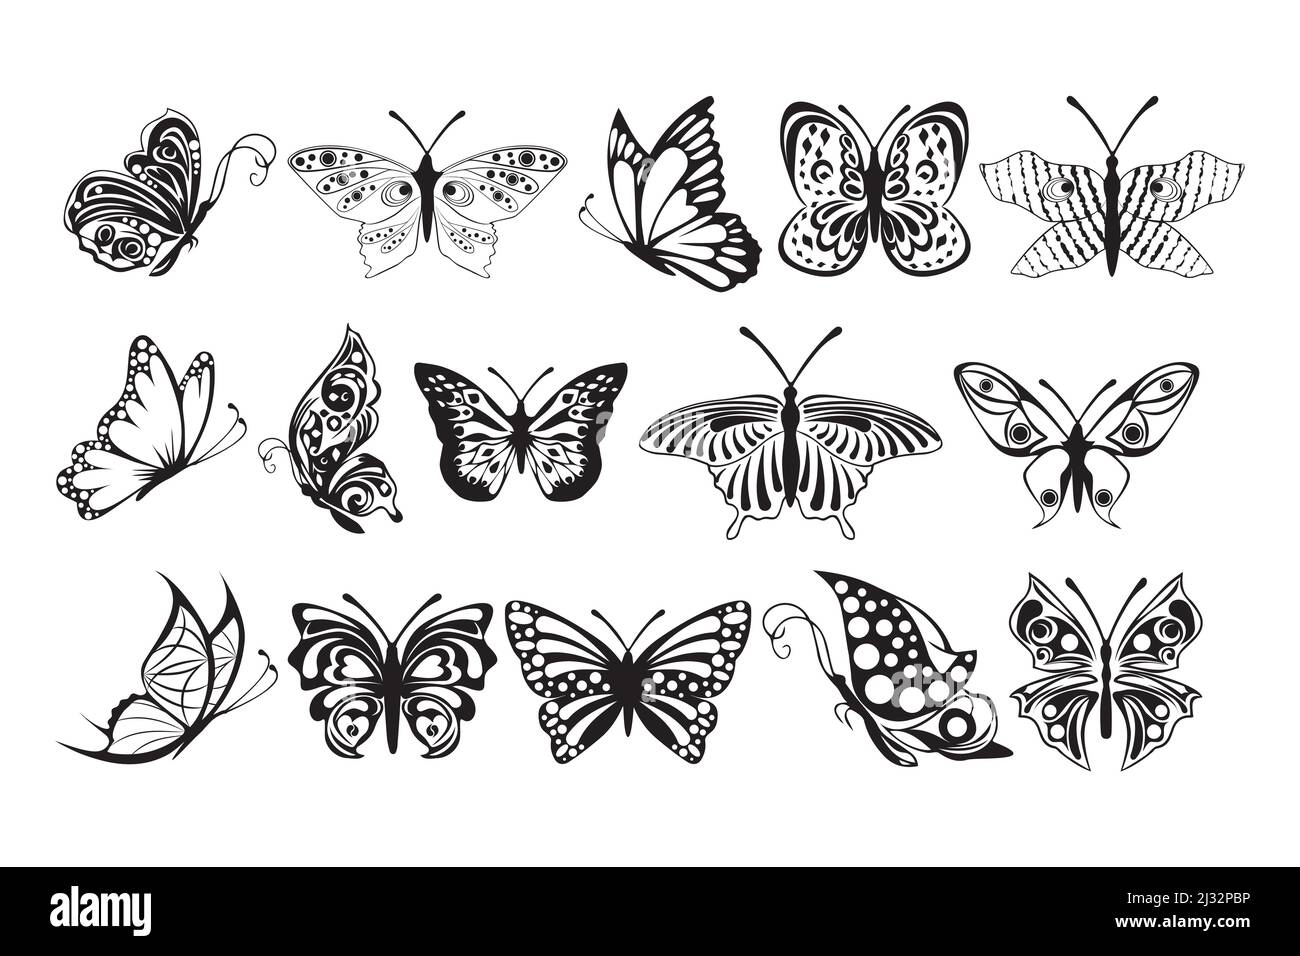 Illustration of many butterflys pattern. Black Sketch butterflys on white background. Vector illustration Stock Vector